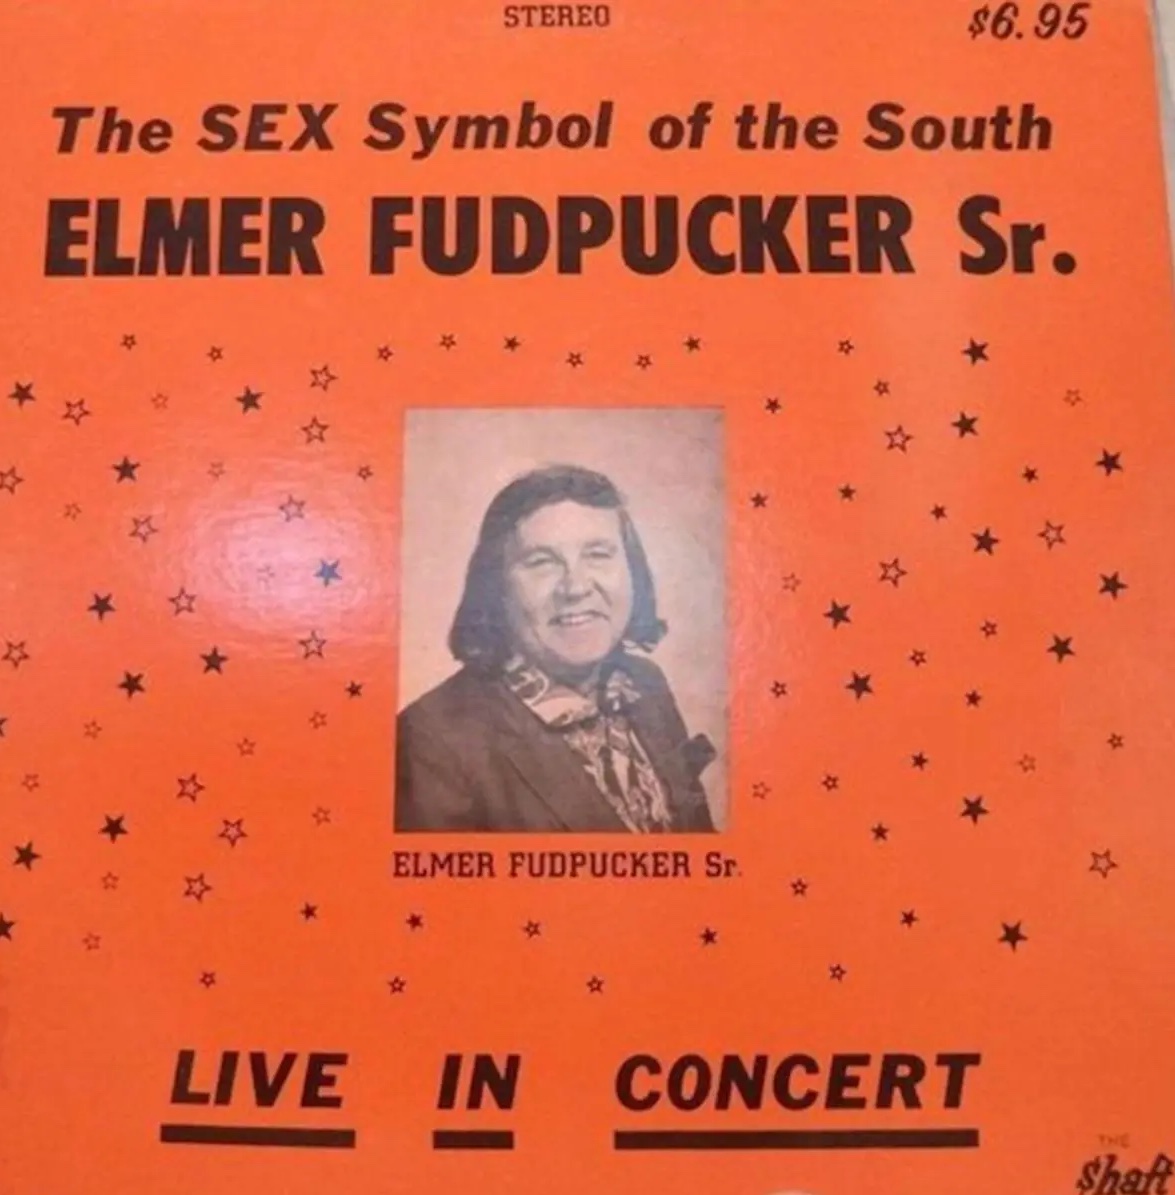 all time worst album covers - Stereo $6.95 The Sex Symbol of the South Elmer Fudpucker Sr. >